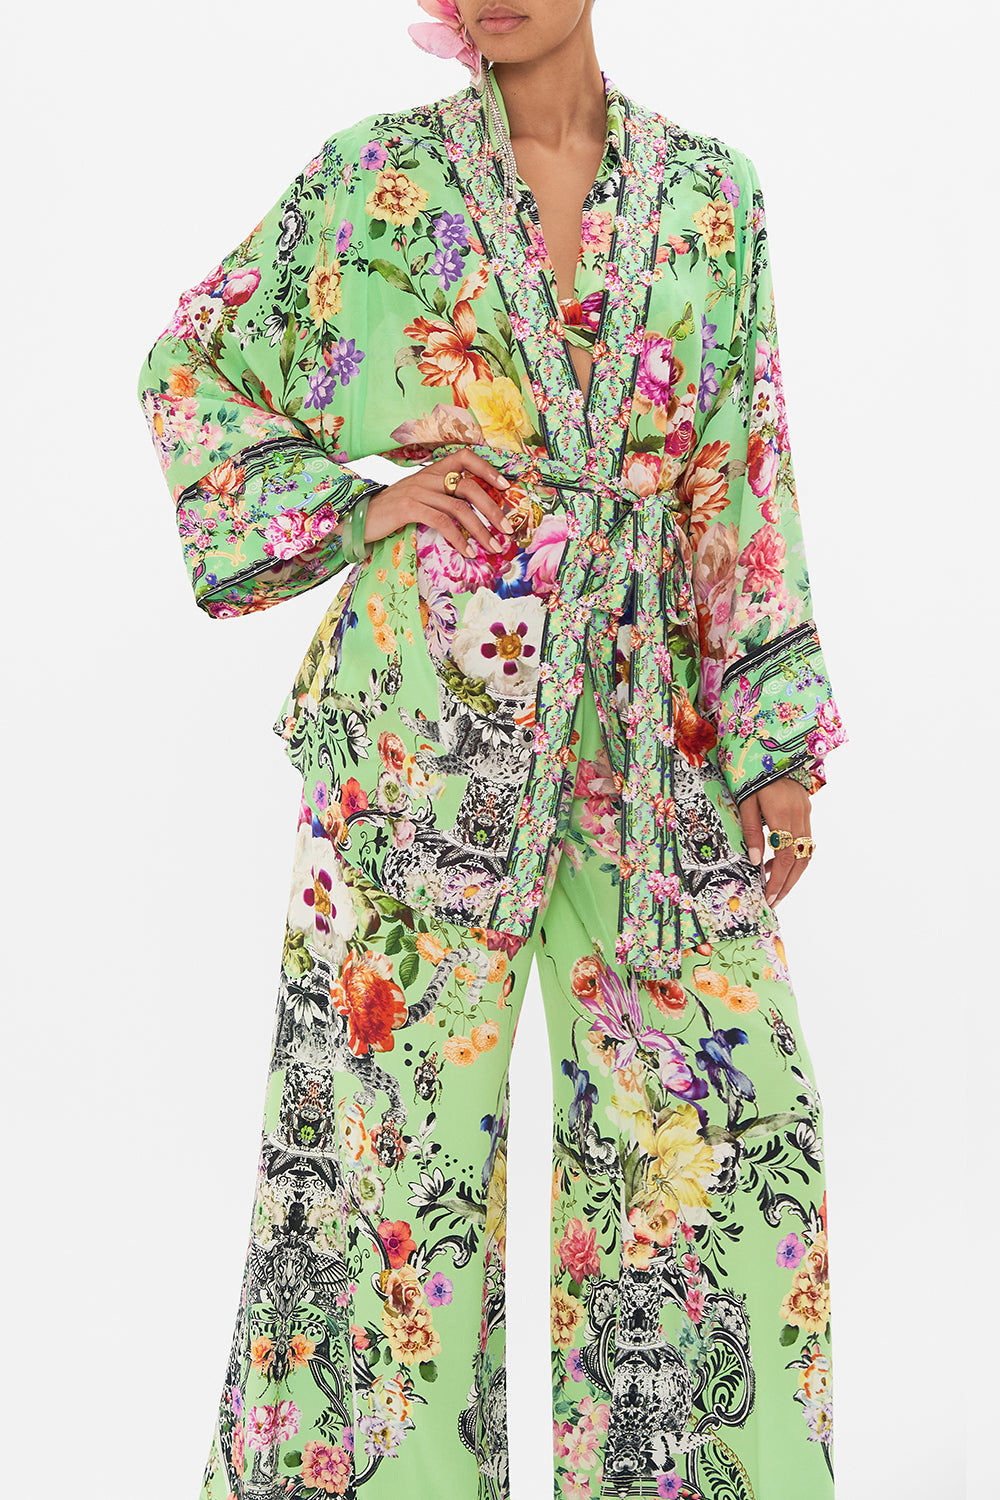 Crop view of model wearing CAMILLA silk kimono in Porcelain Dream print